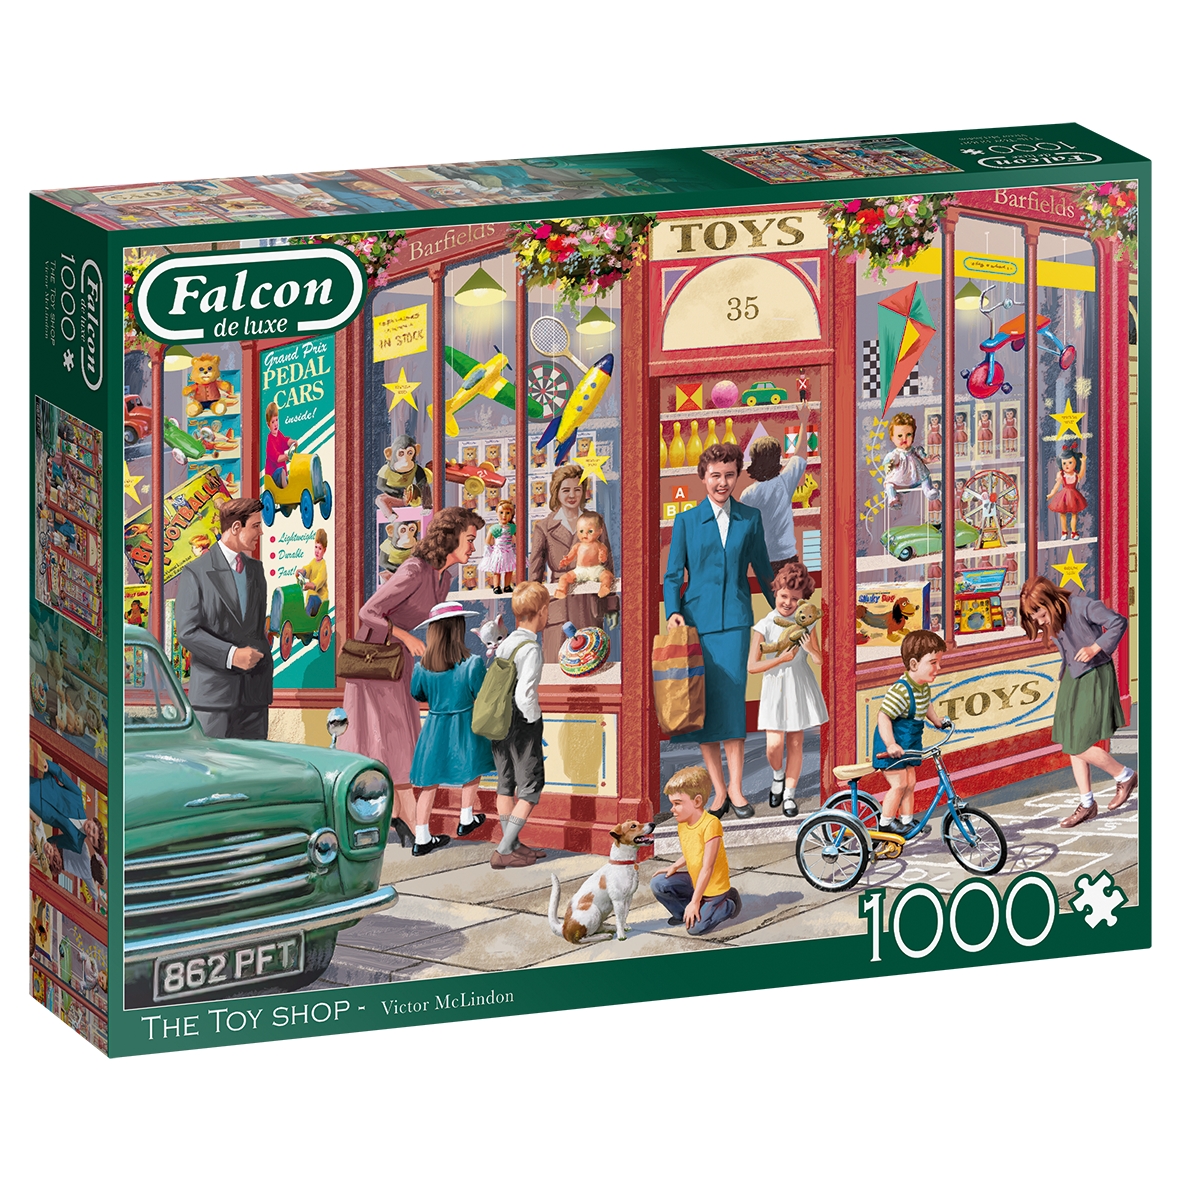 Puzzle 1000: Falcon - Sklep z zabawki na rogu ulicy (11284)